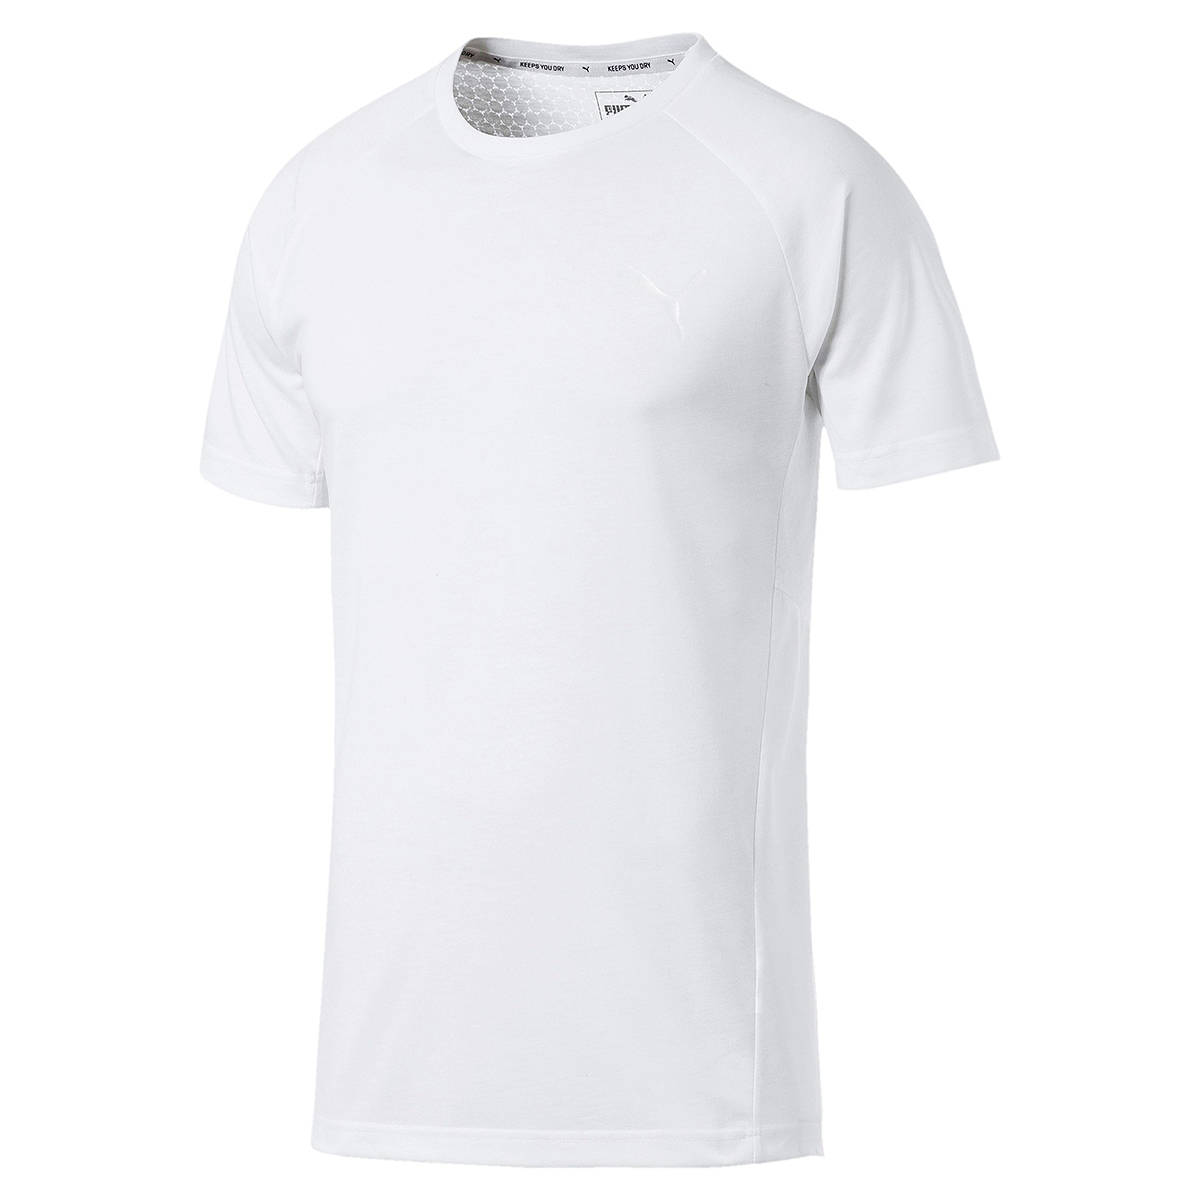 PUMA Evostripe Move Tee Herren T-shirt Sportswear 854071 02 weiss